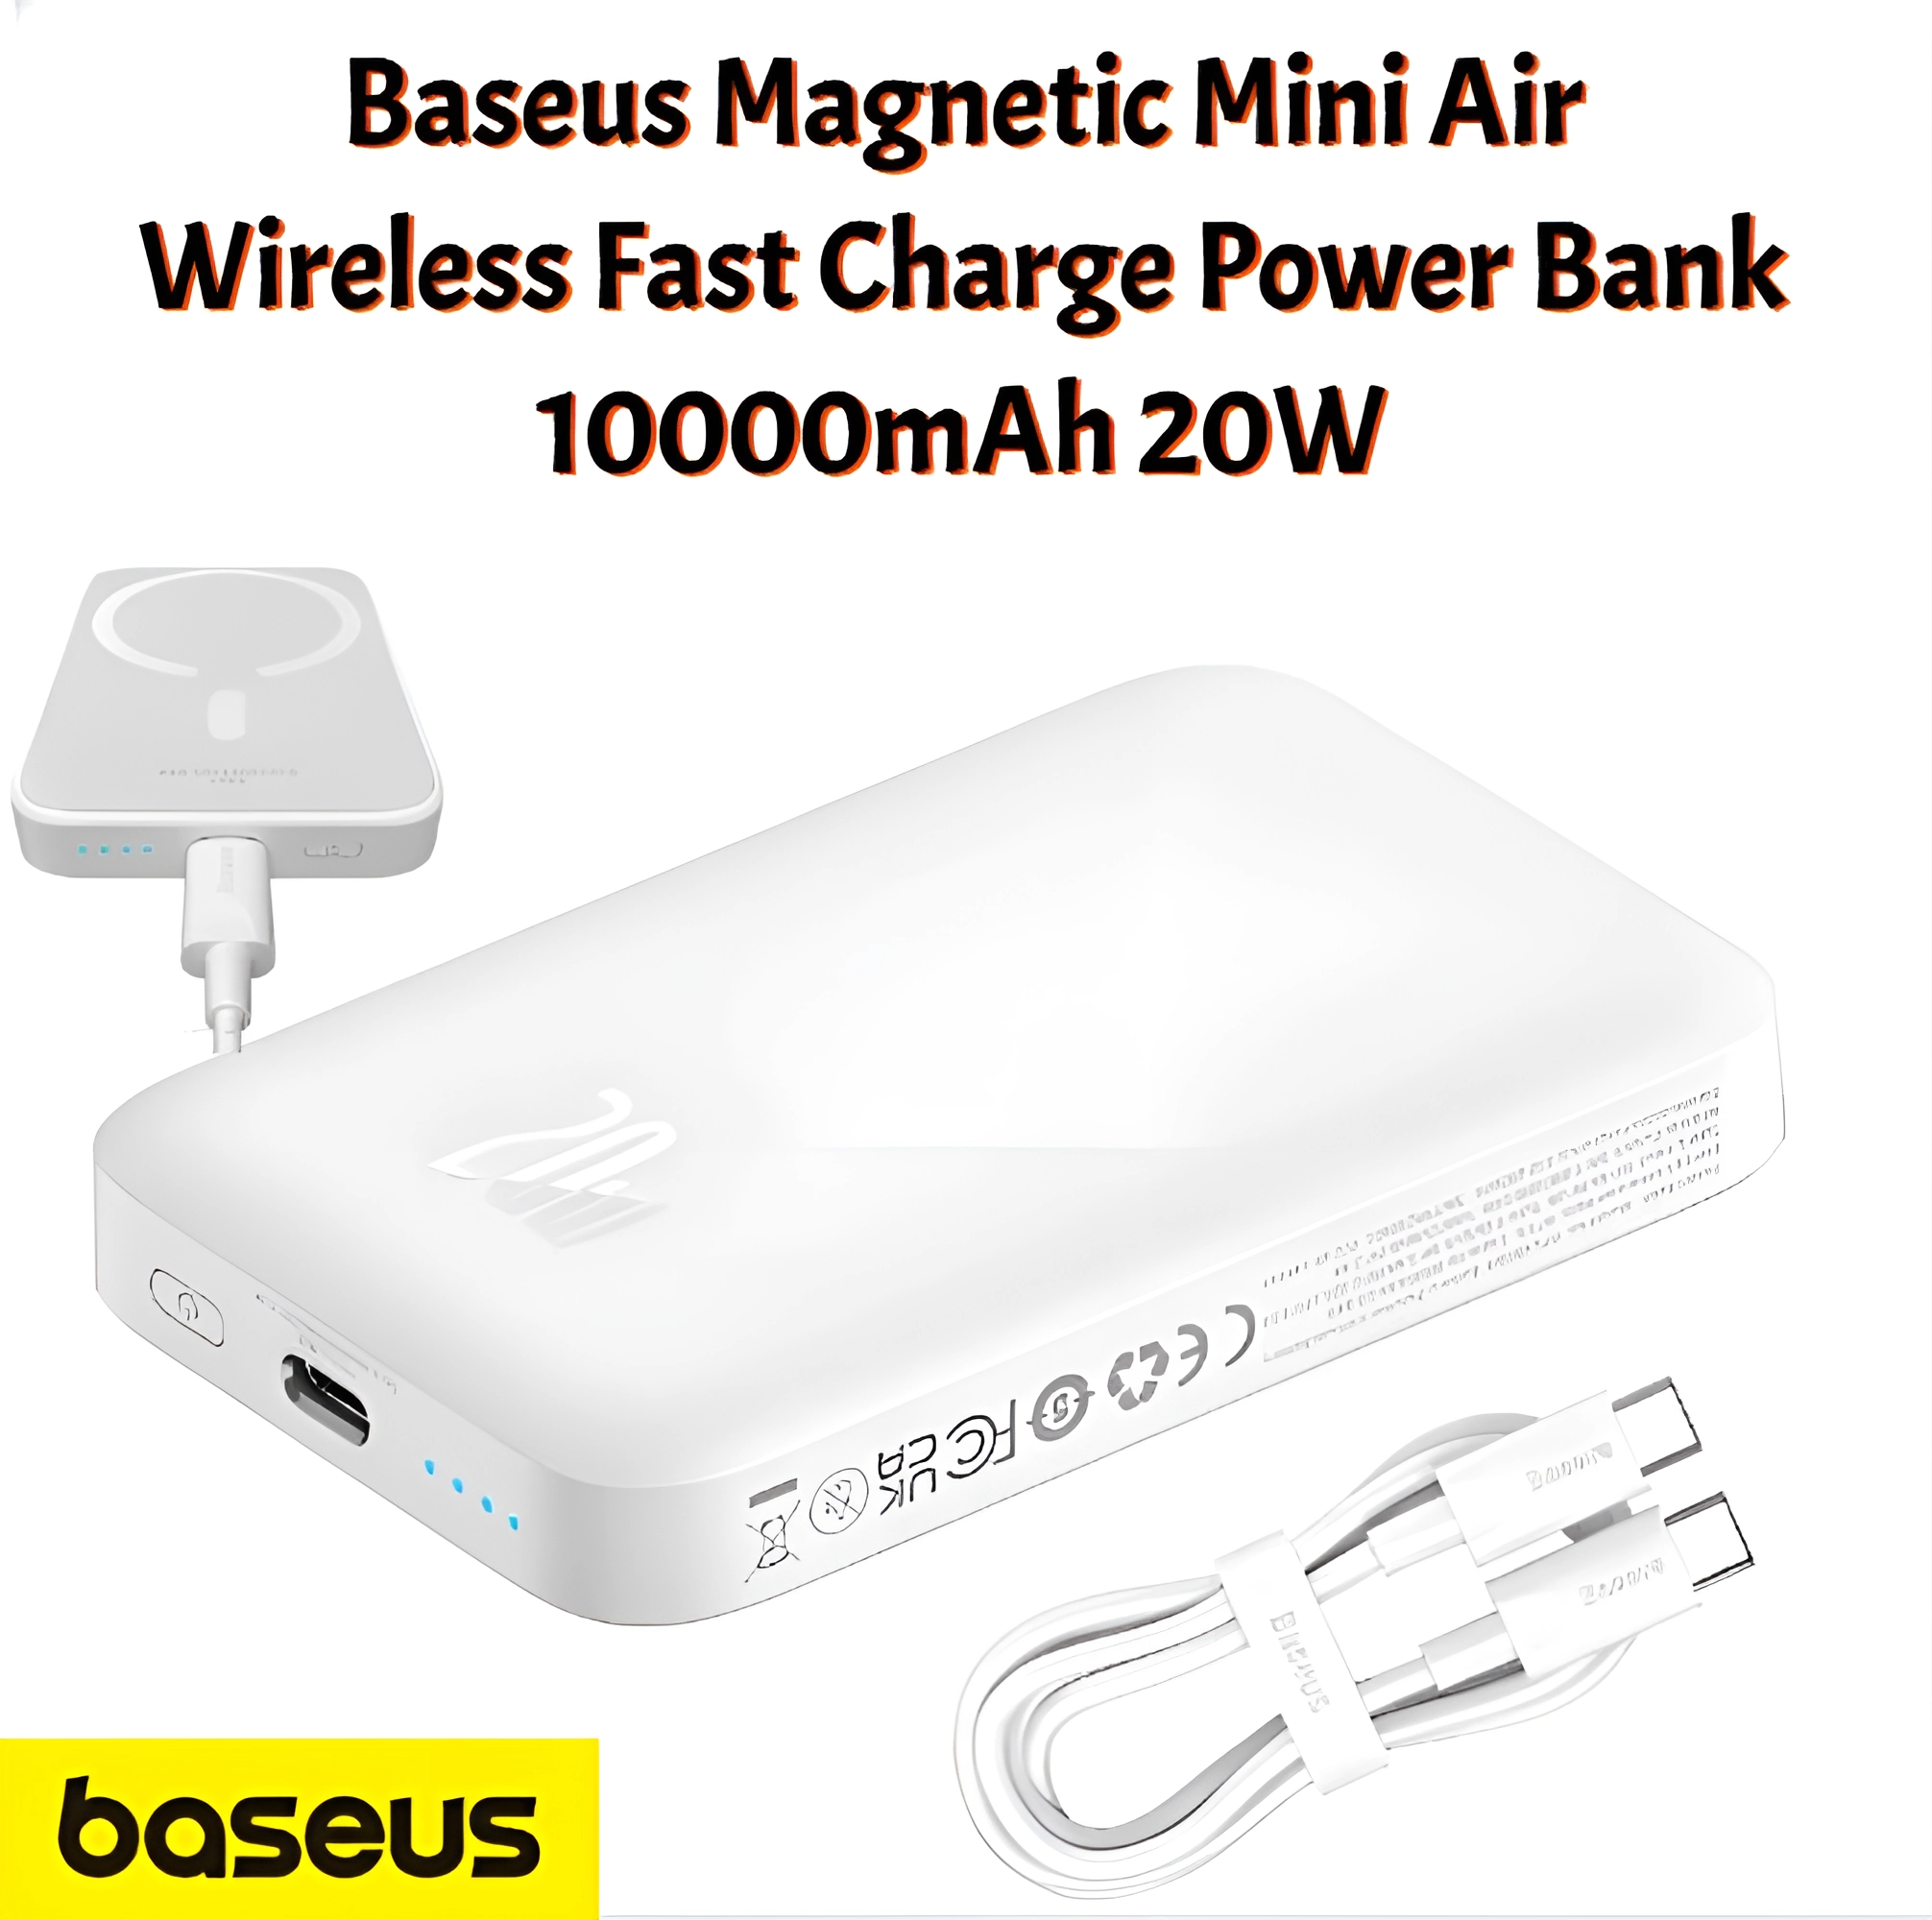 Внешний аккумулятор с беспроводной зарядкой Baseus Magnetic Mini Air Wireless Fast Charge Power Bank 10000mAh 20W, с кабелем type-c, белый